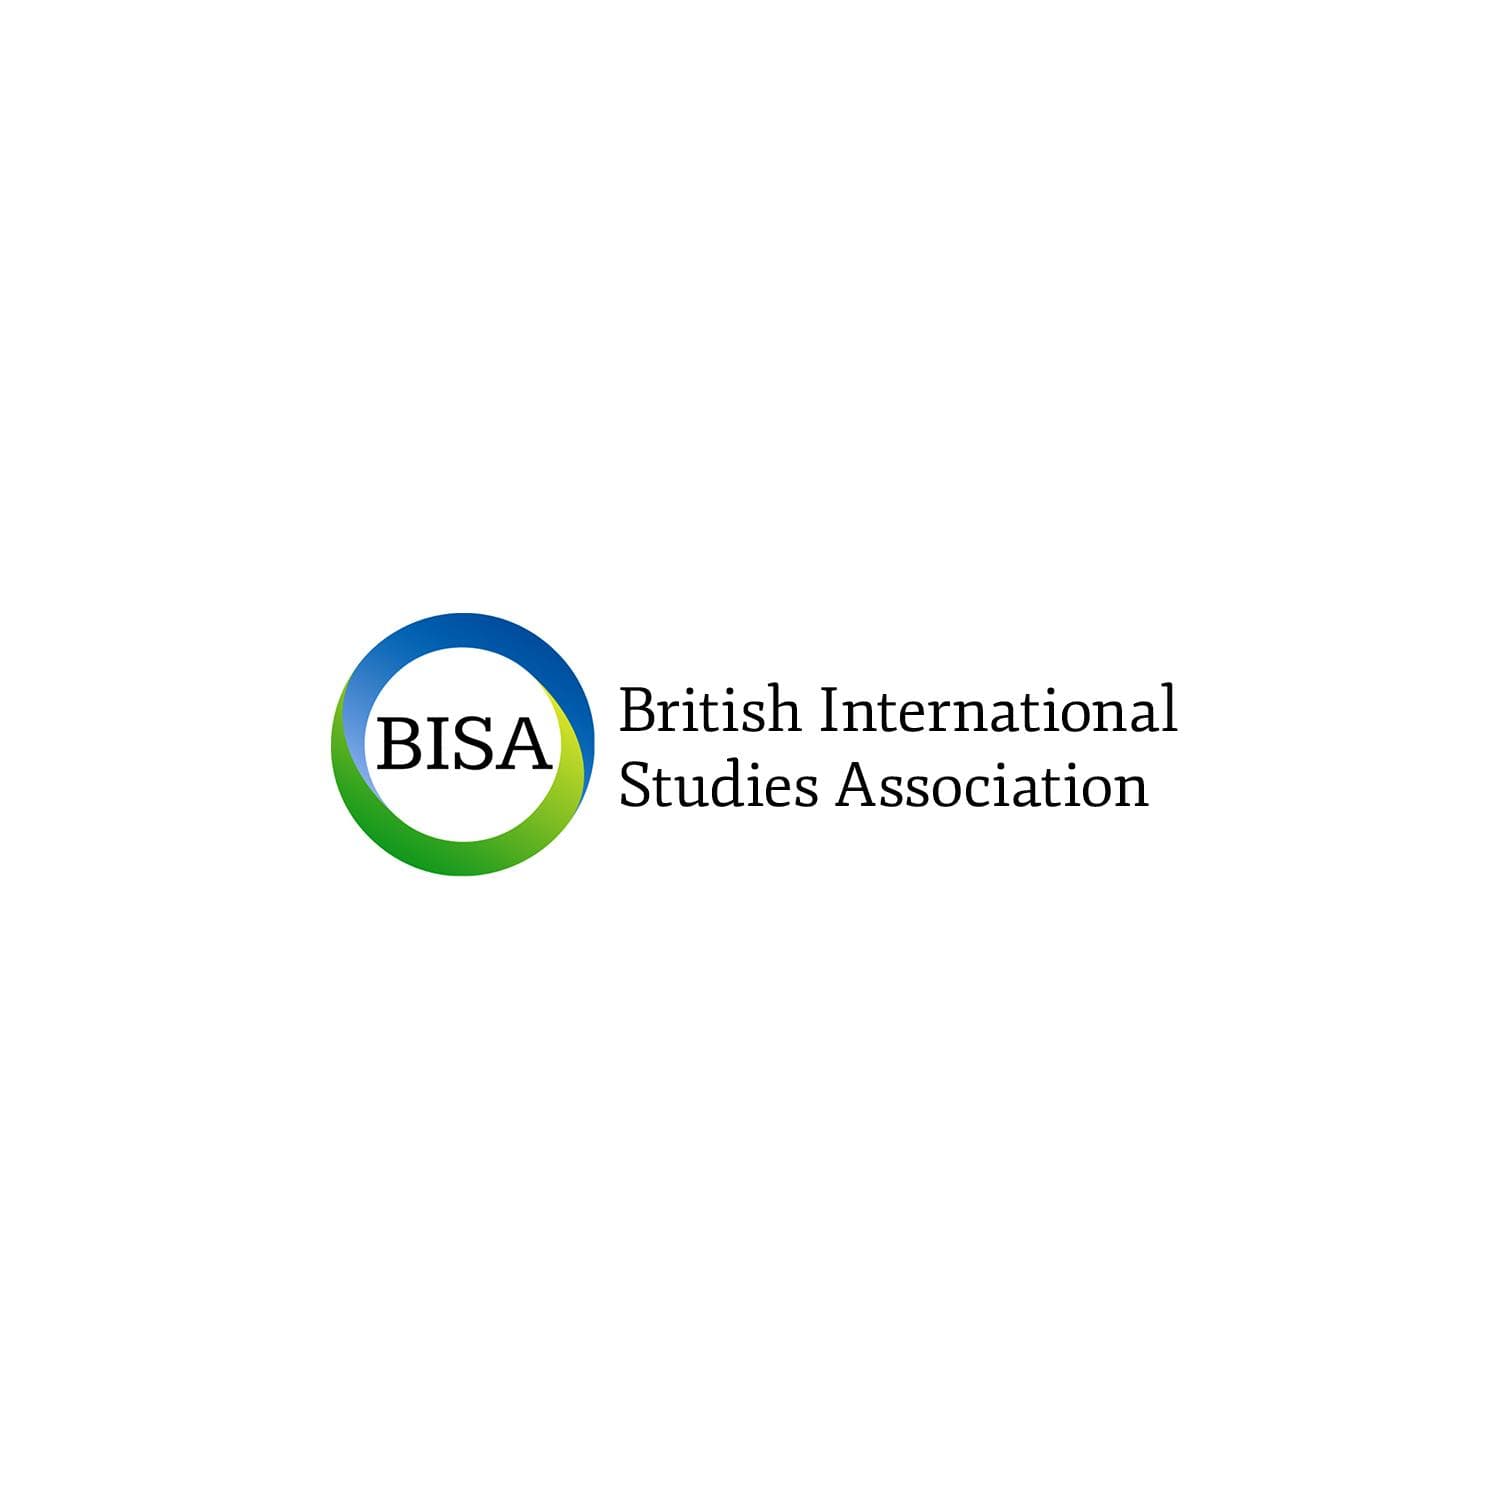 Previous BISA logo